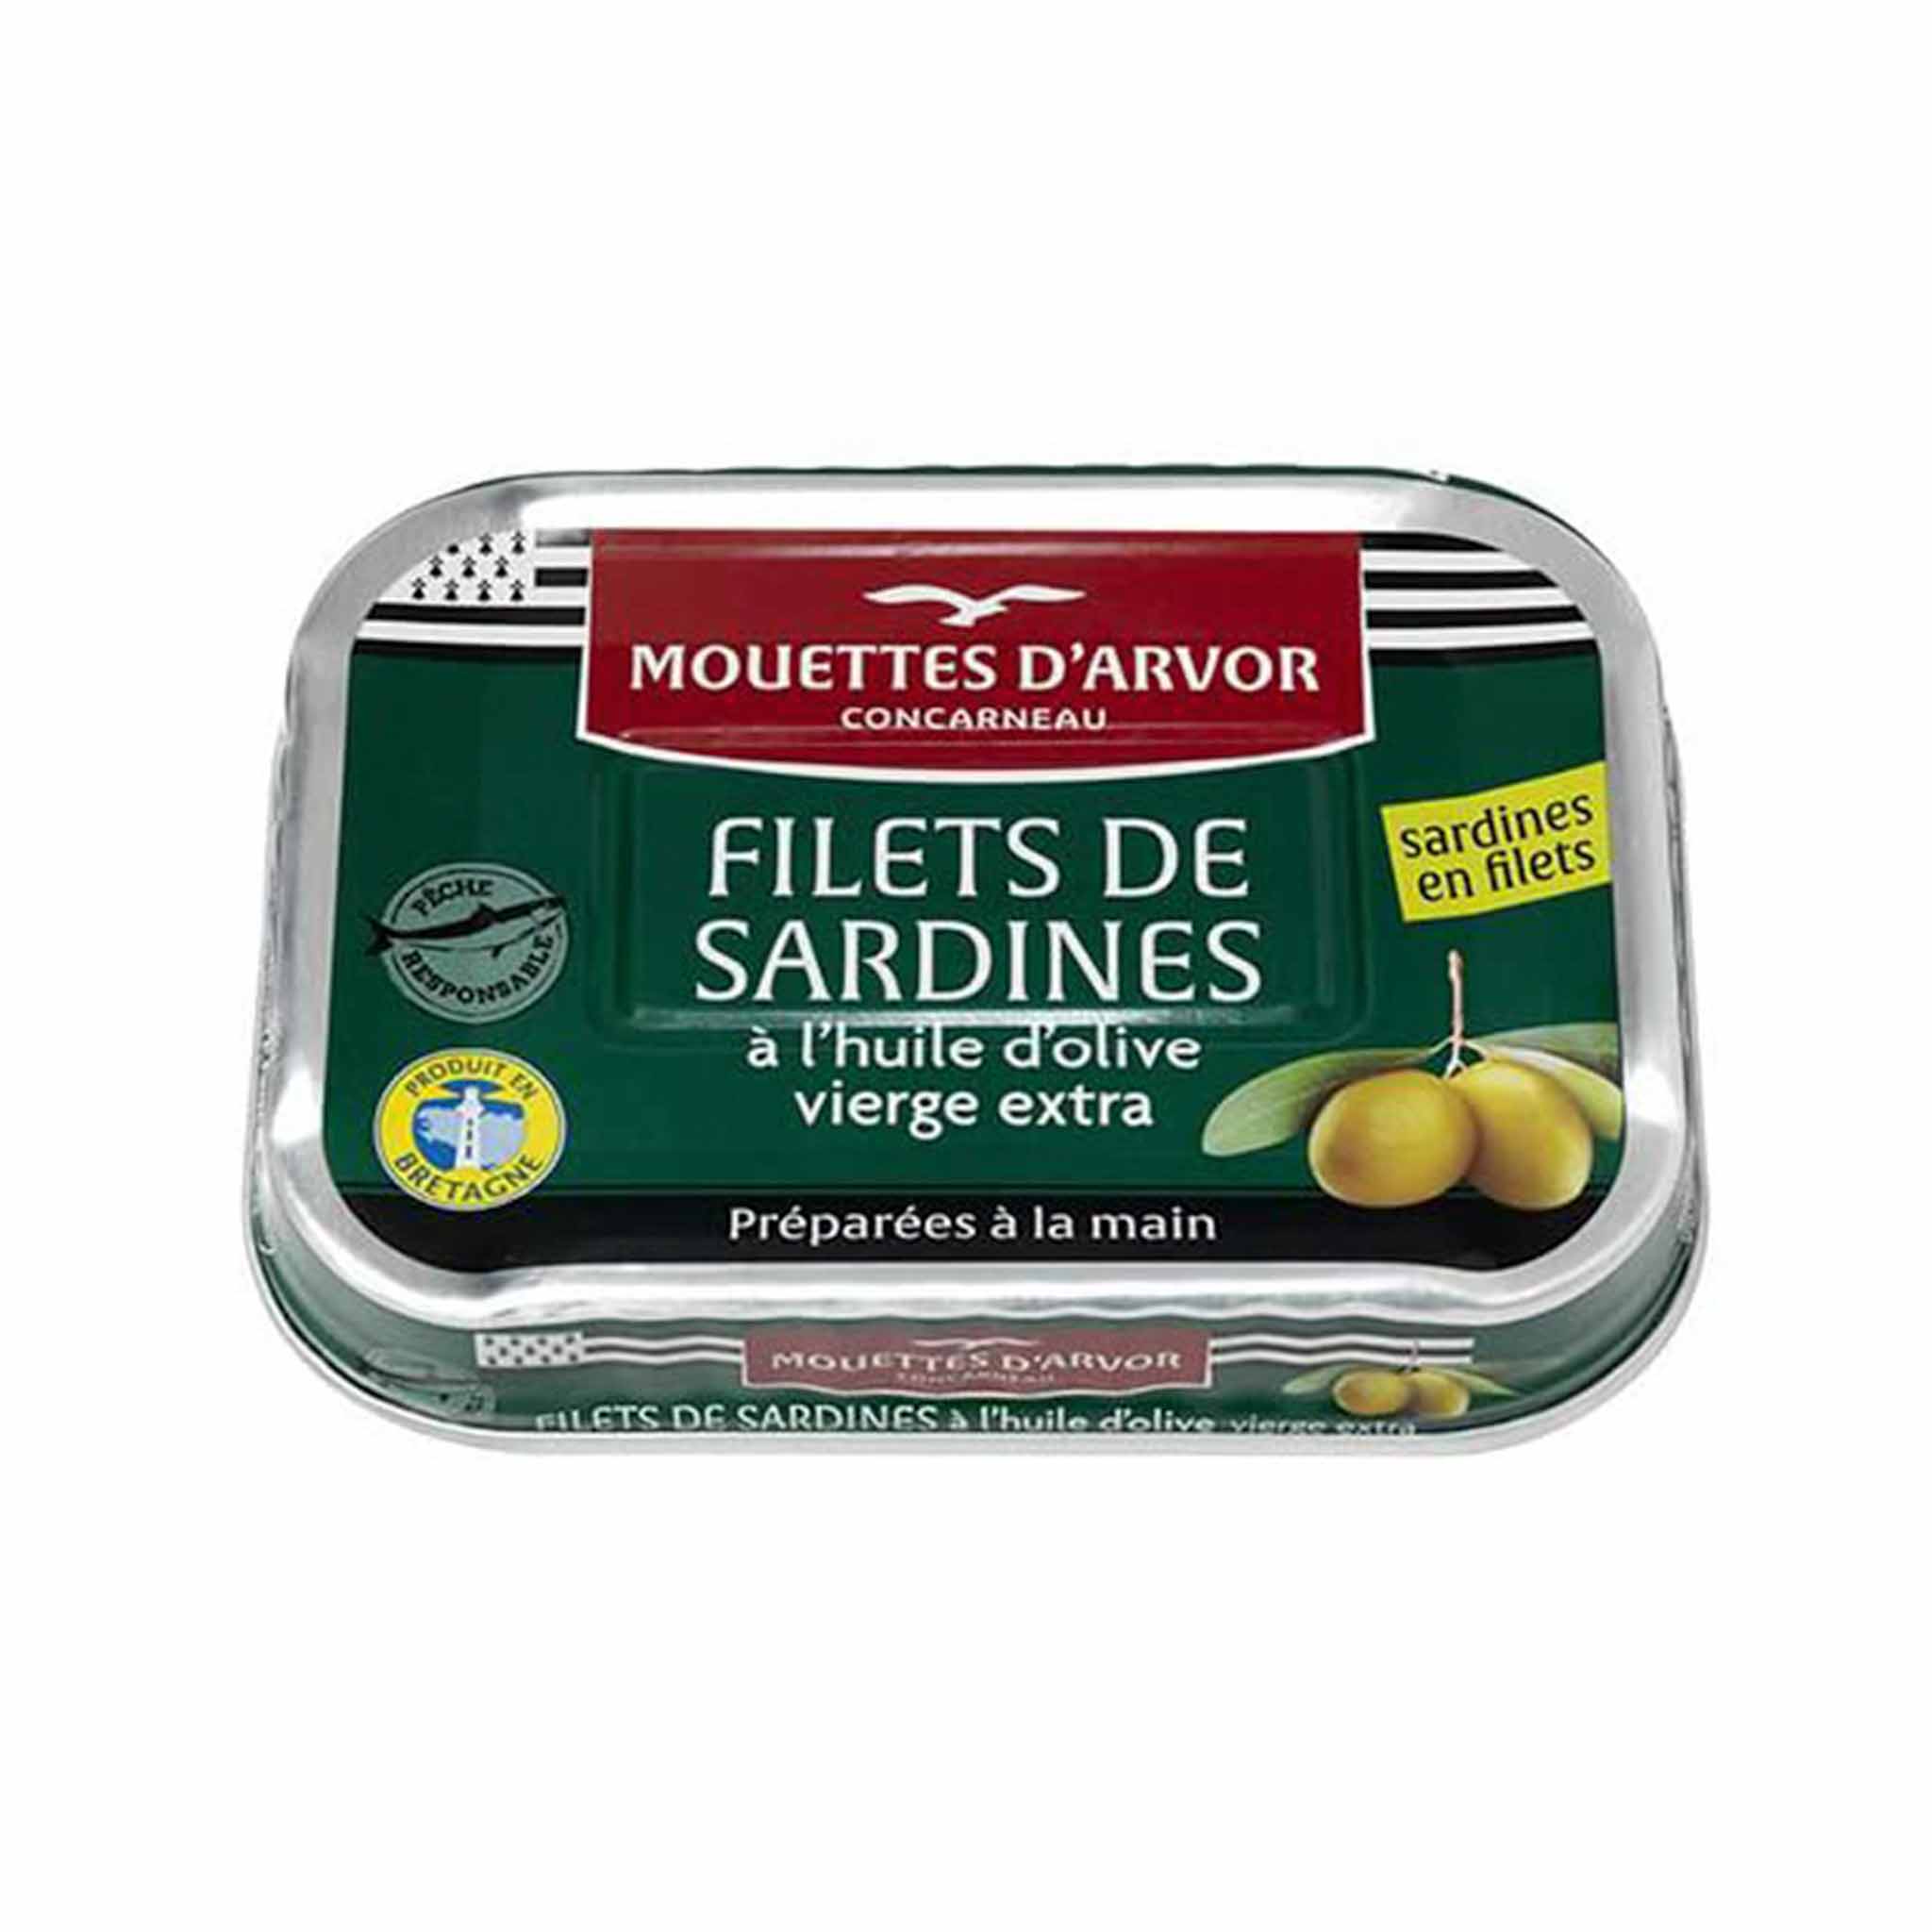 Les Mouettes d'Arvor Sardines Extra Virgin Olive Oil